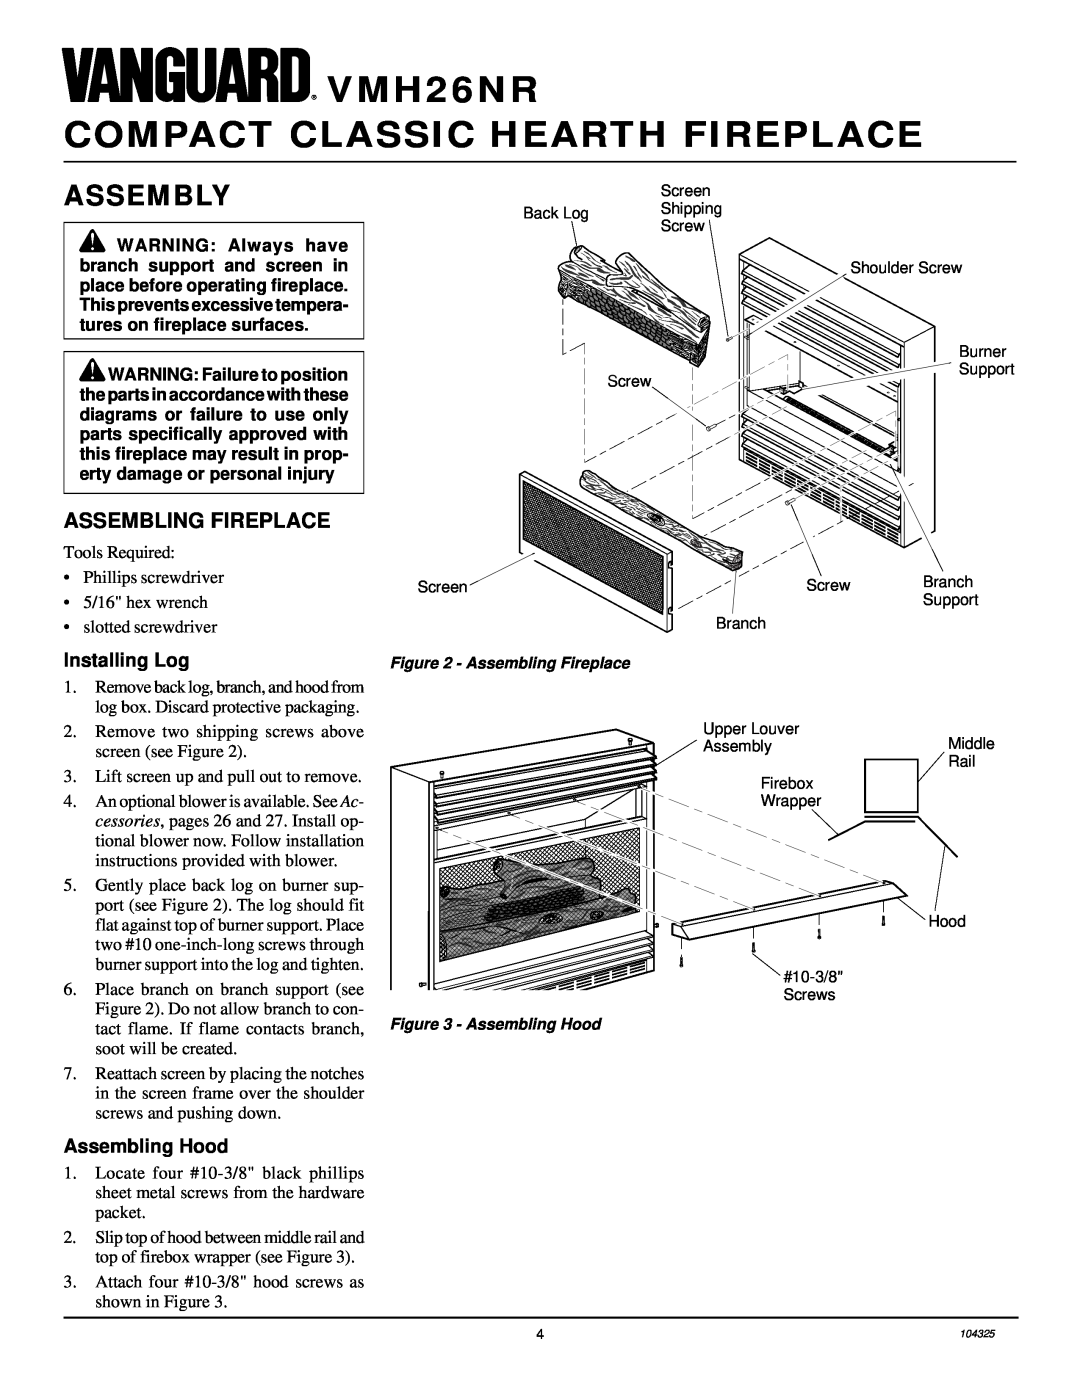 Vanguard Heating VMH26NR installation manual Assembly, Assembling Fireplace, Installing Log, Assembling Hood 